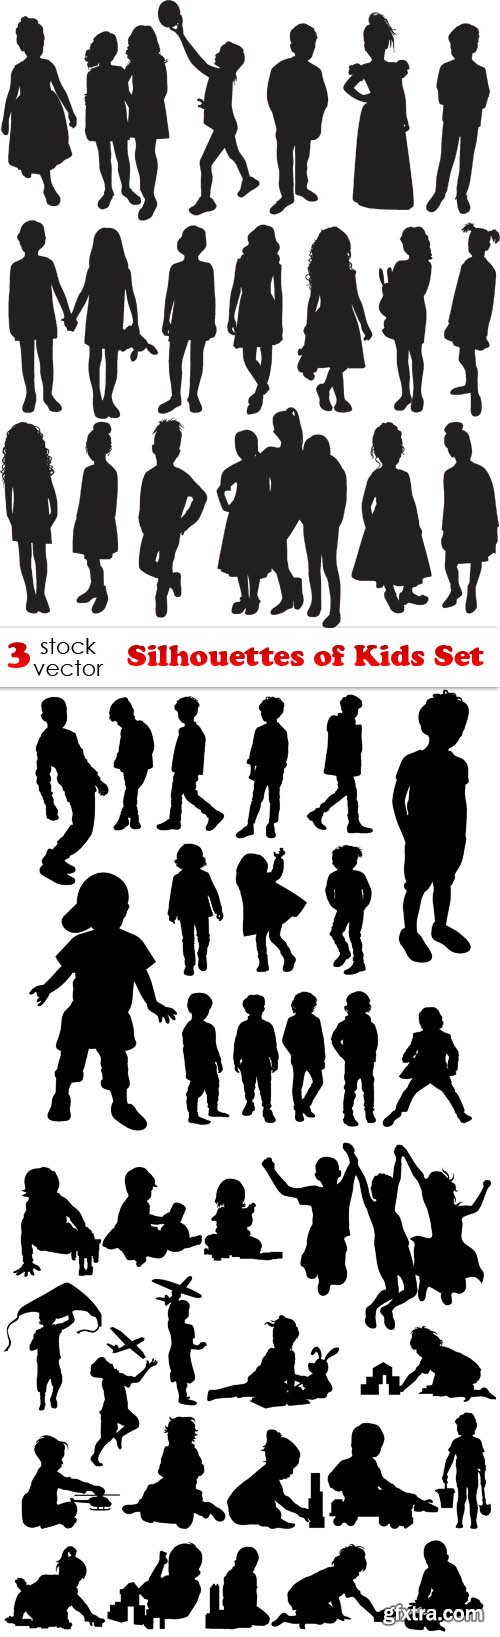 Vectors - Silhouettes of Kids Set